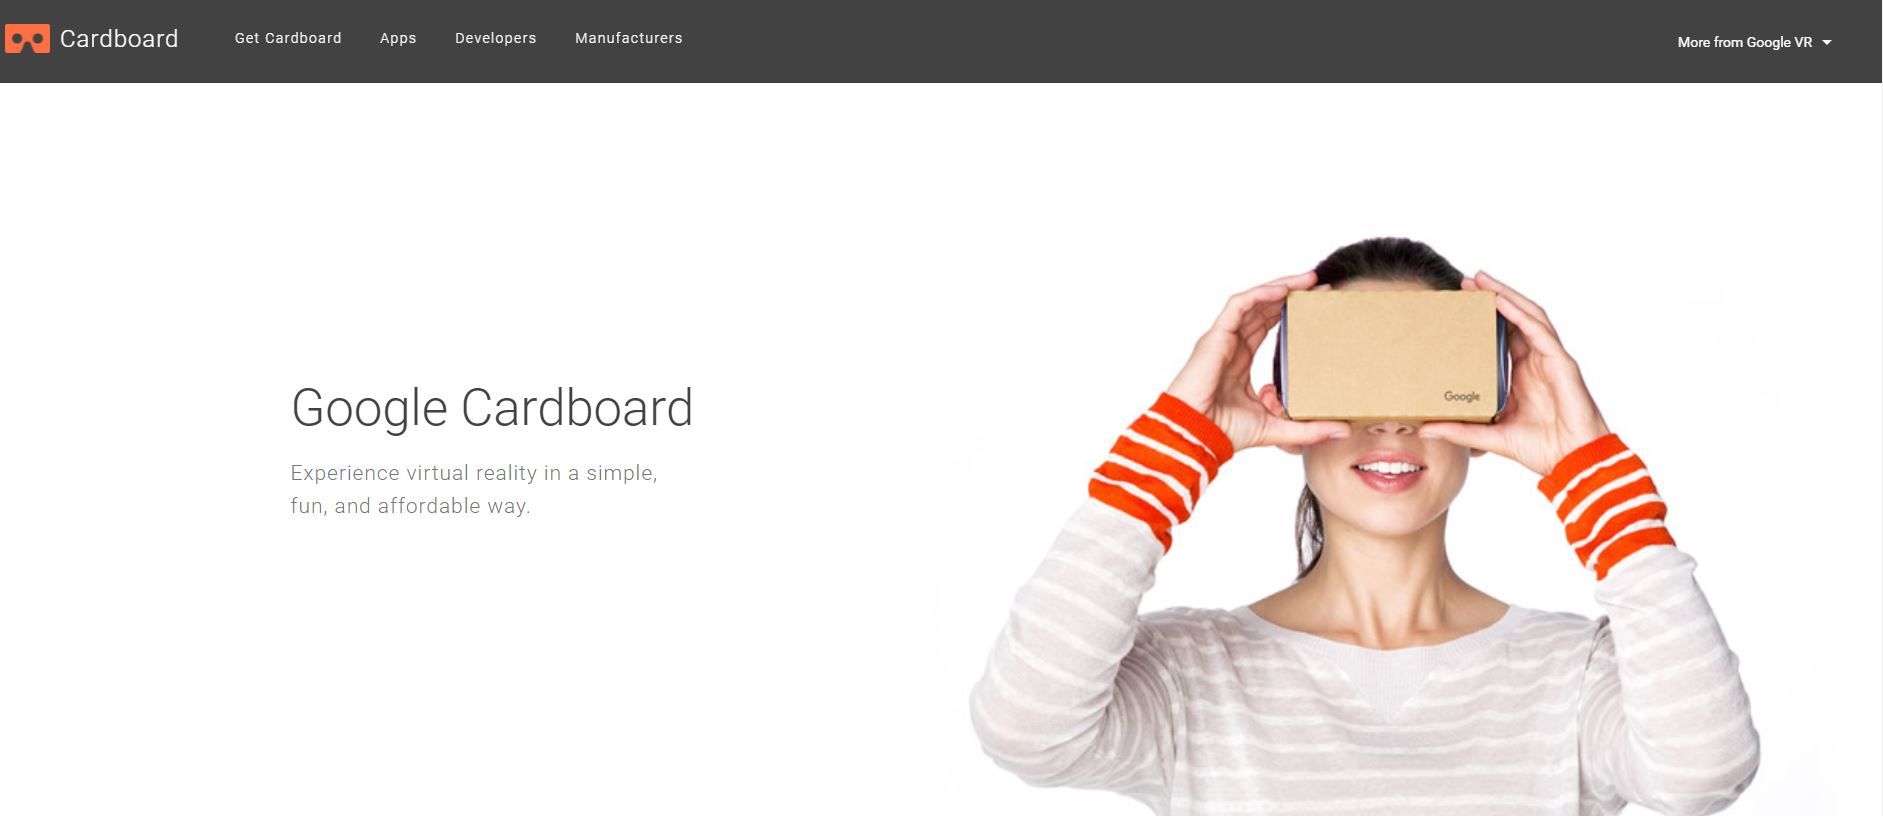 Google Cardboard homepage